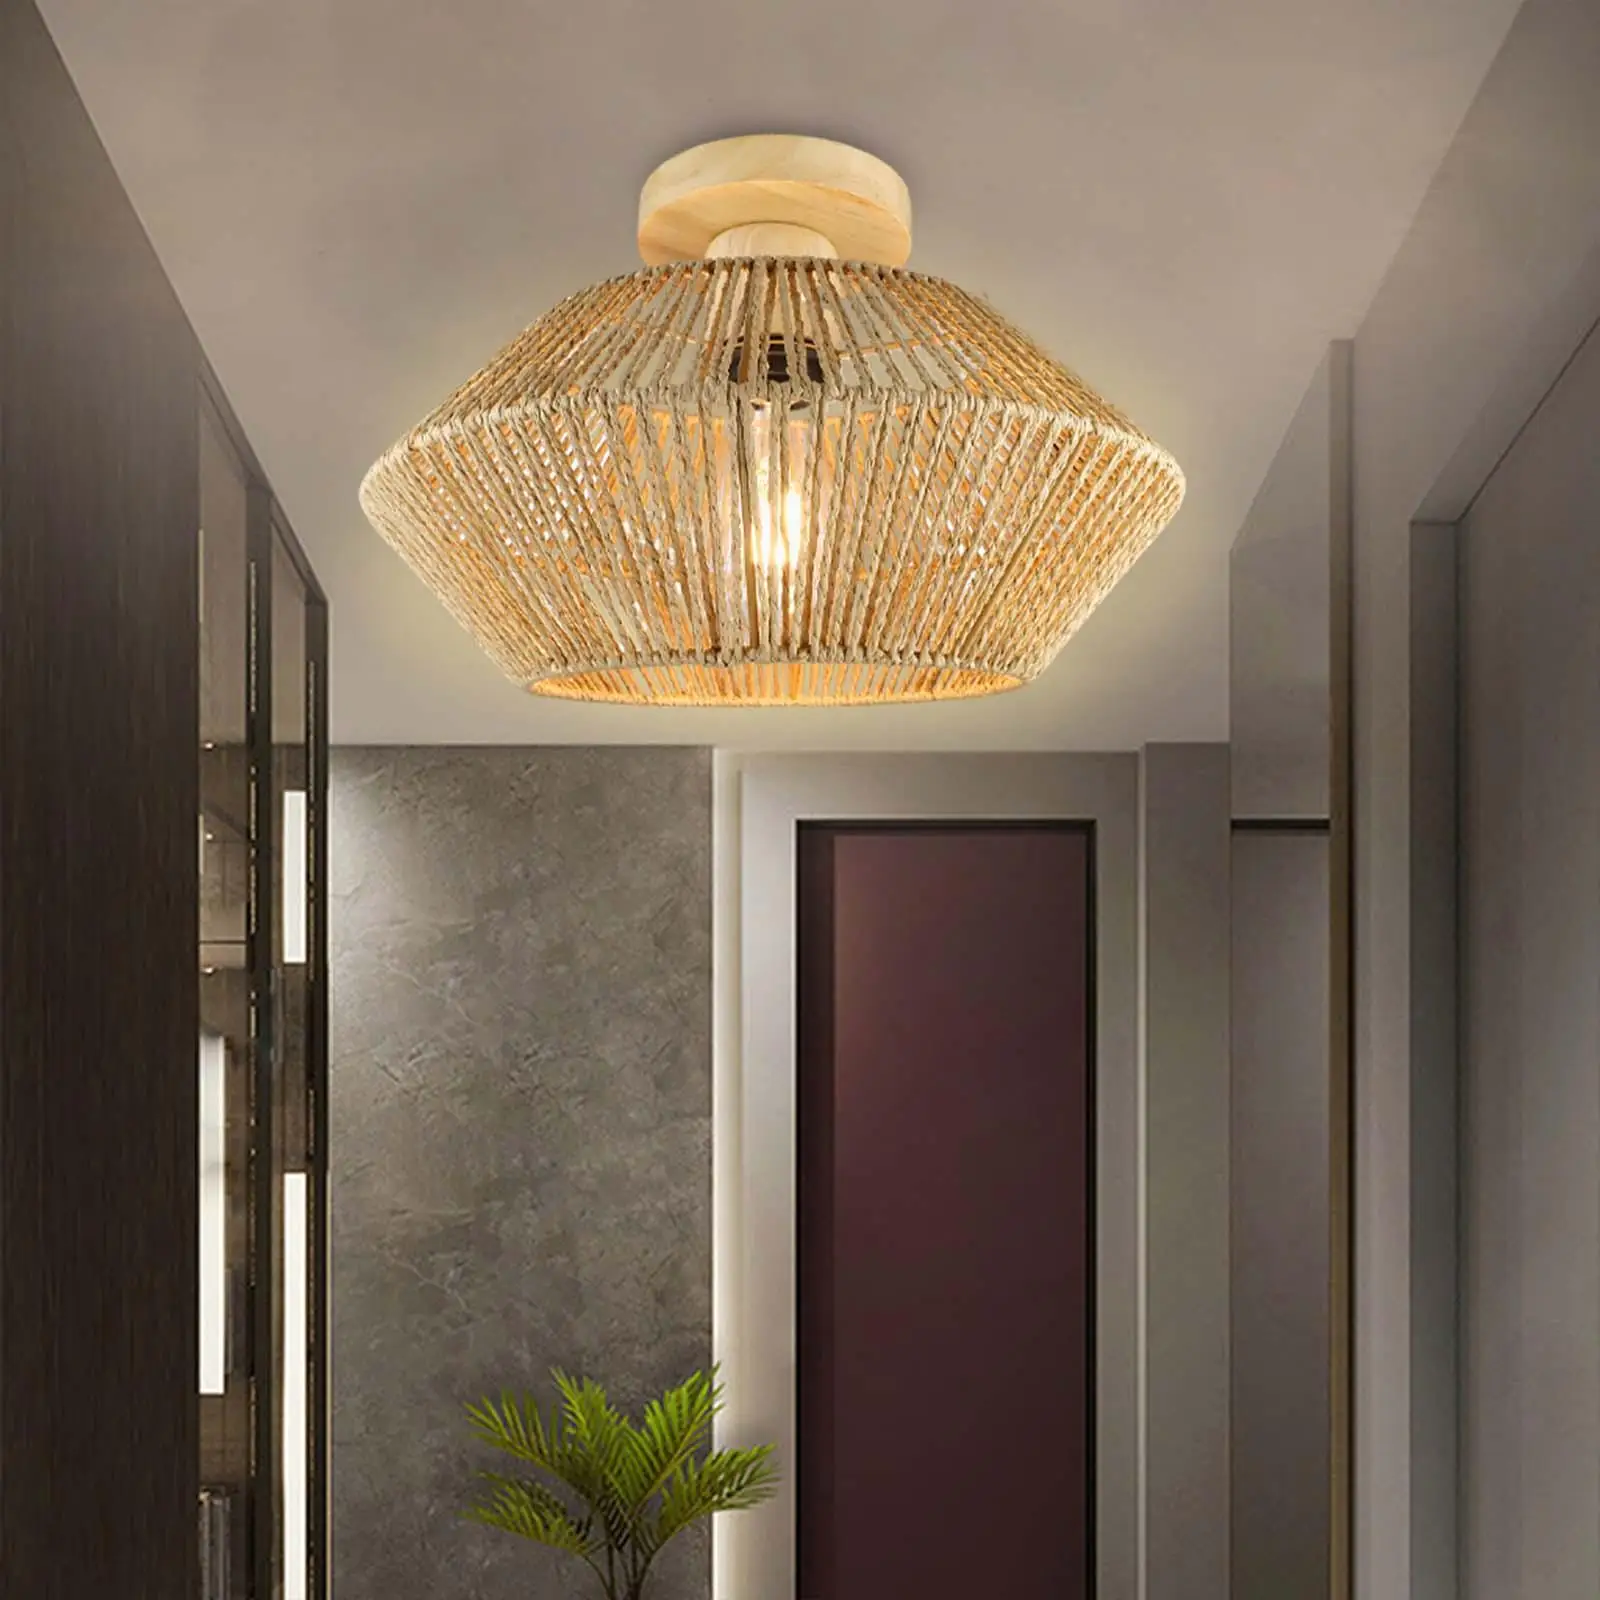 Vintage LED Ceiling Lamp Shades Light Fixture Handmade Woven Light Cover for Apartment Tea Room Restaurant Hallway Porch